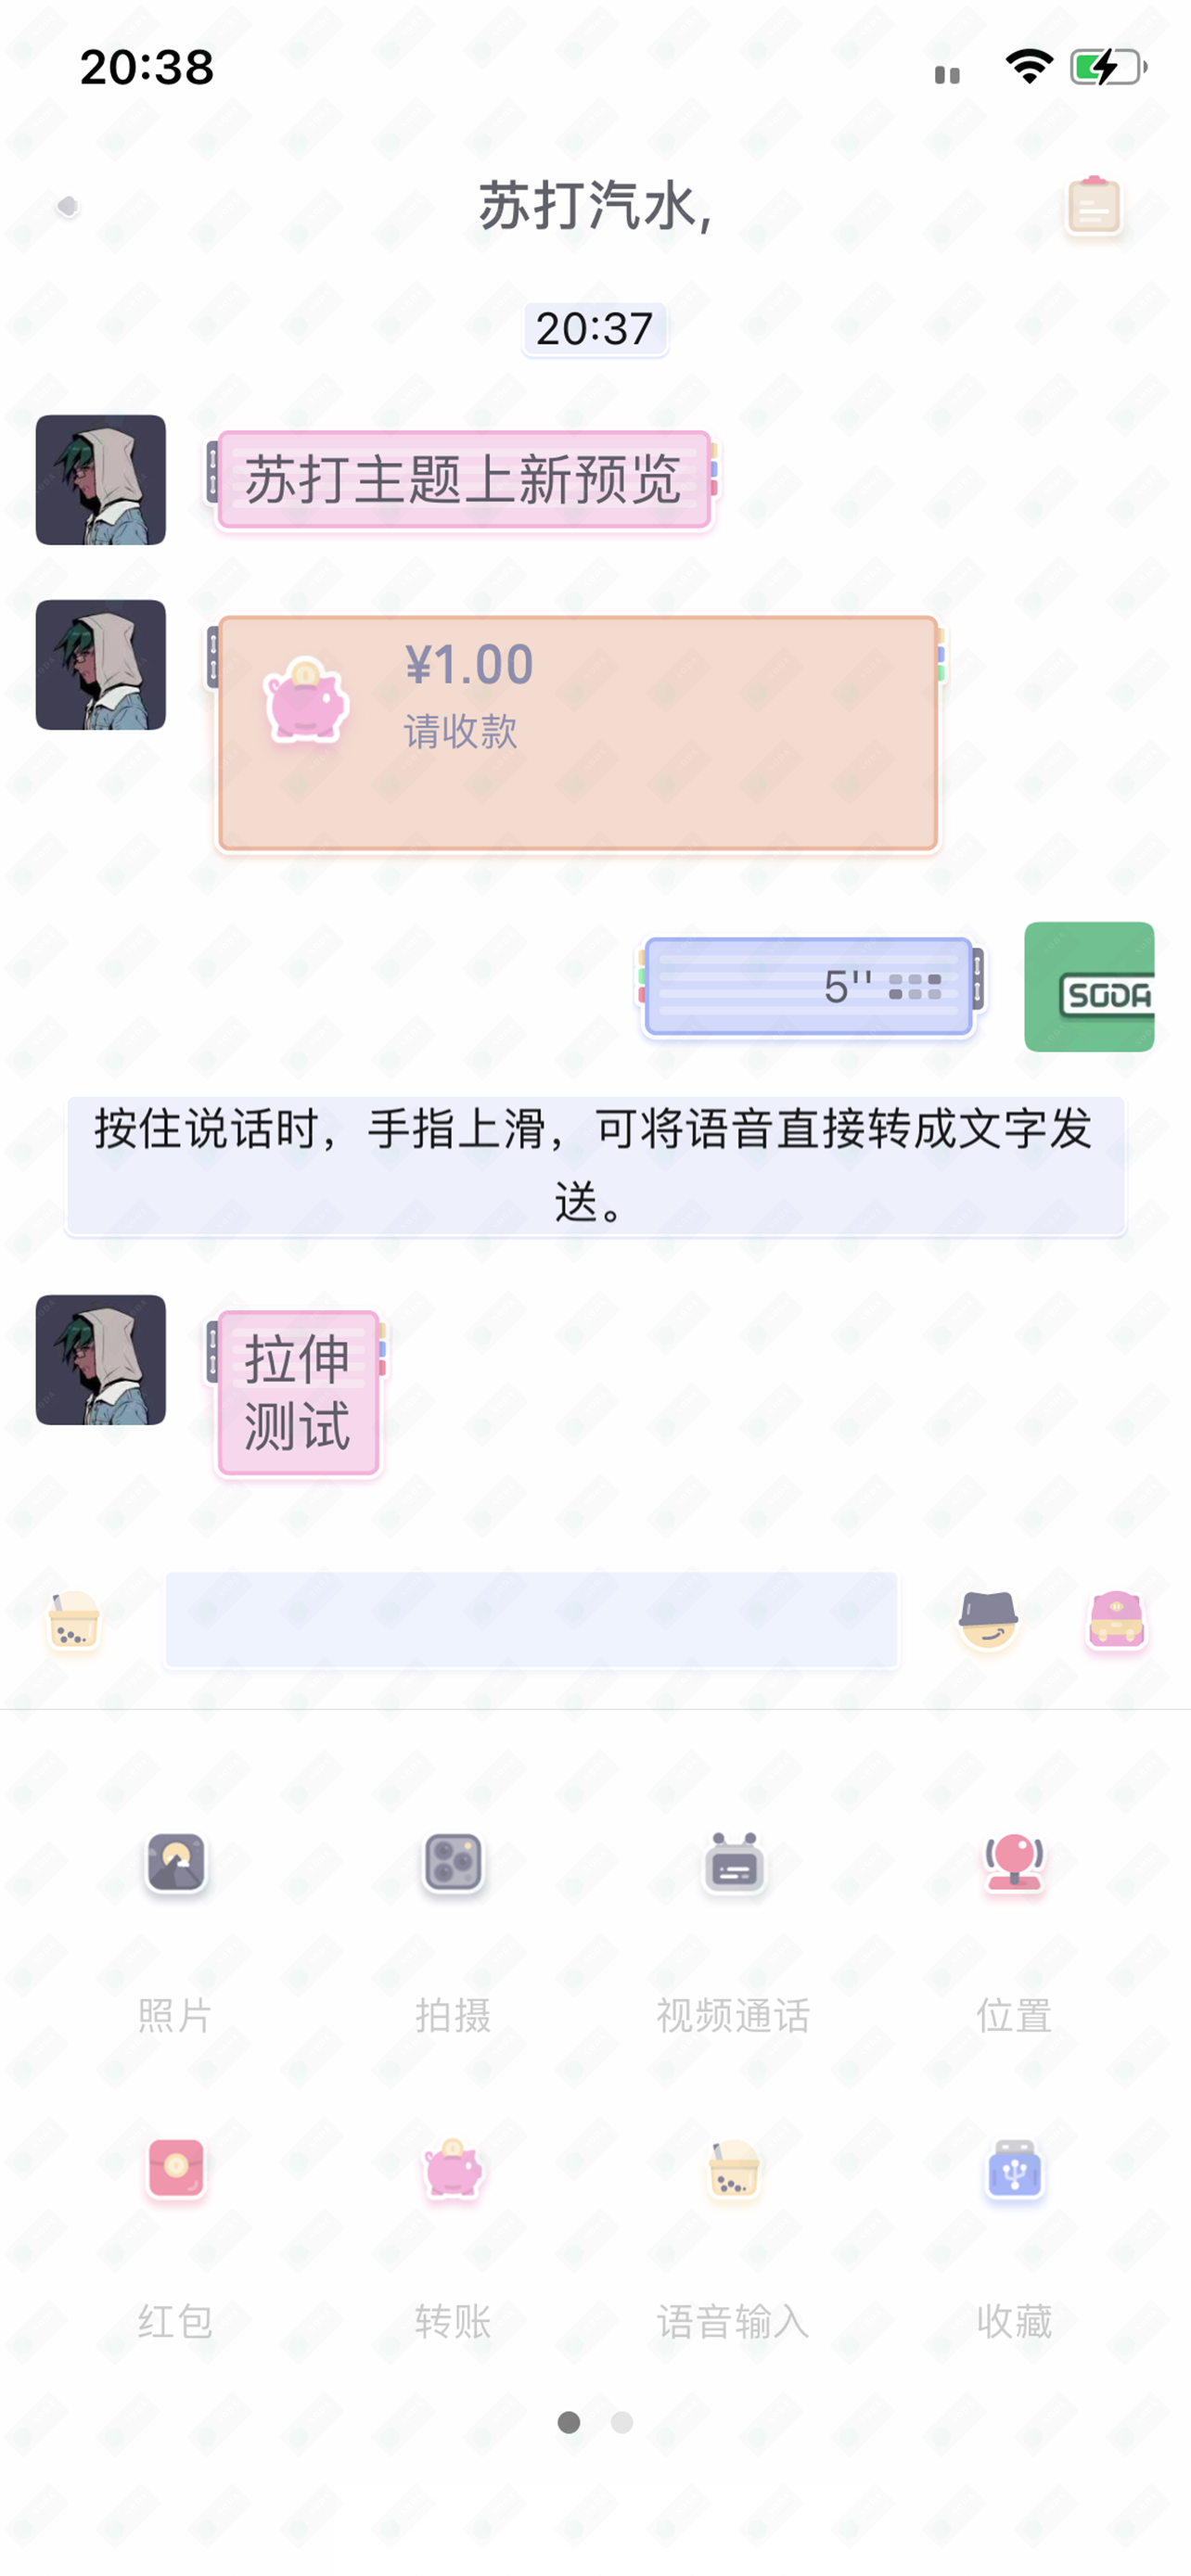 Precious WeChatTheme（微信主题） - 1.02